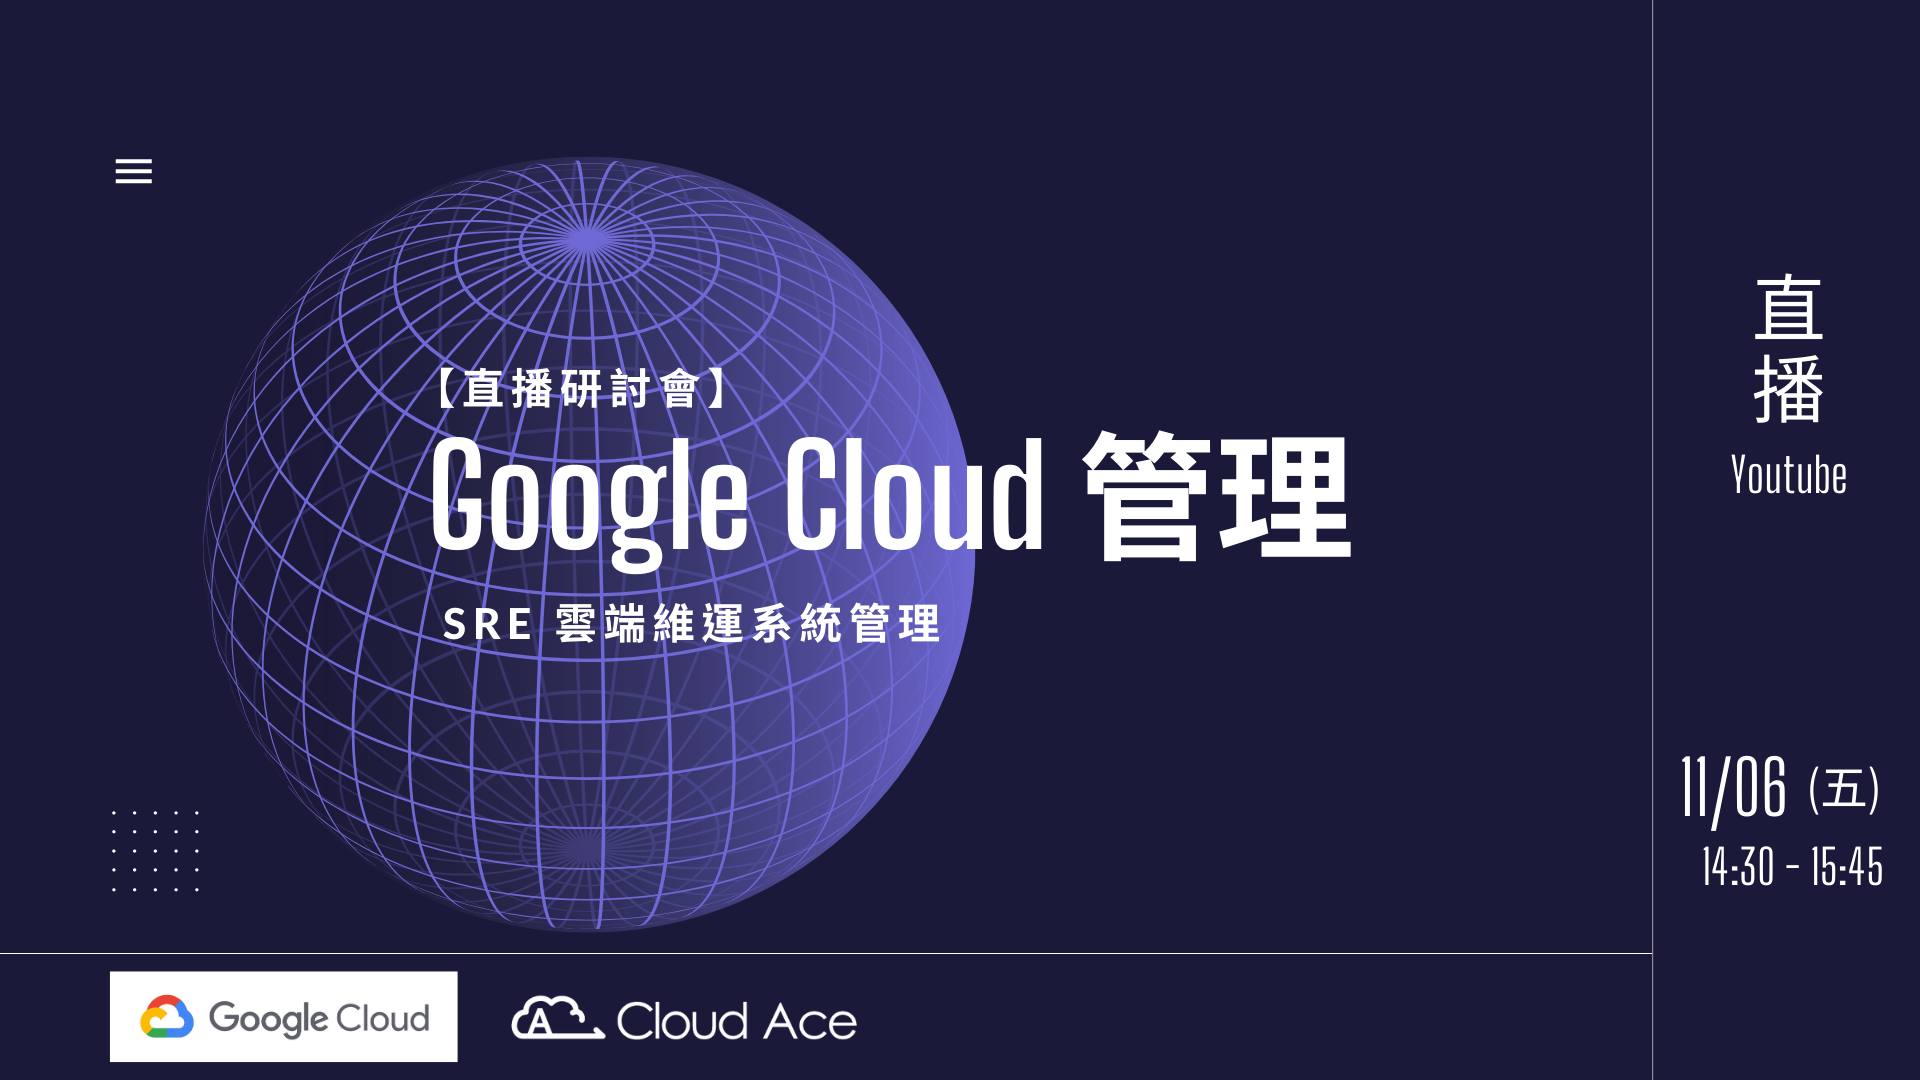 Google Cloud 管理攻略，打造全方位雲端環境｜Operations Management on Google Cloud Platform